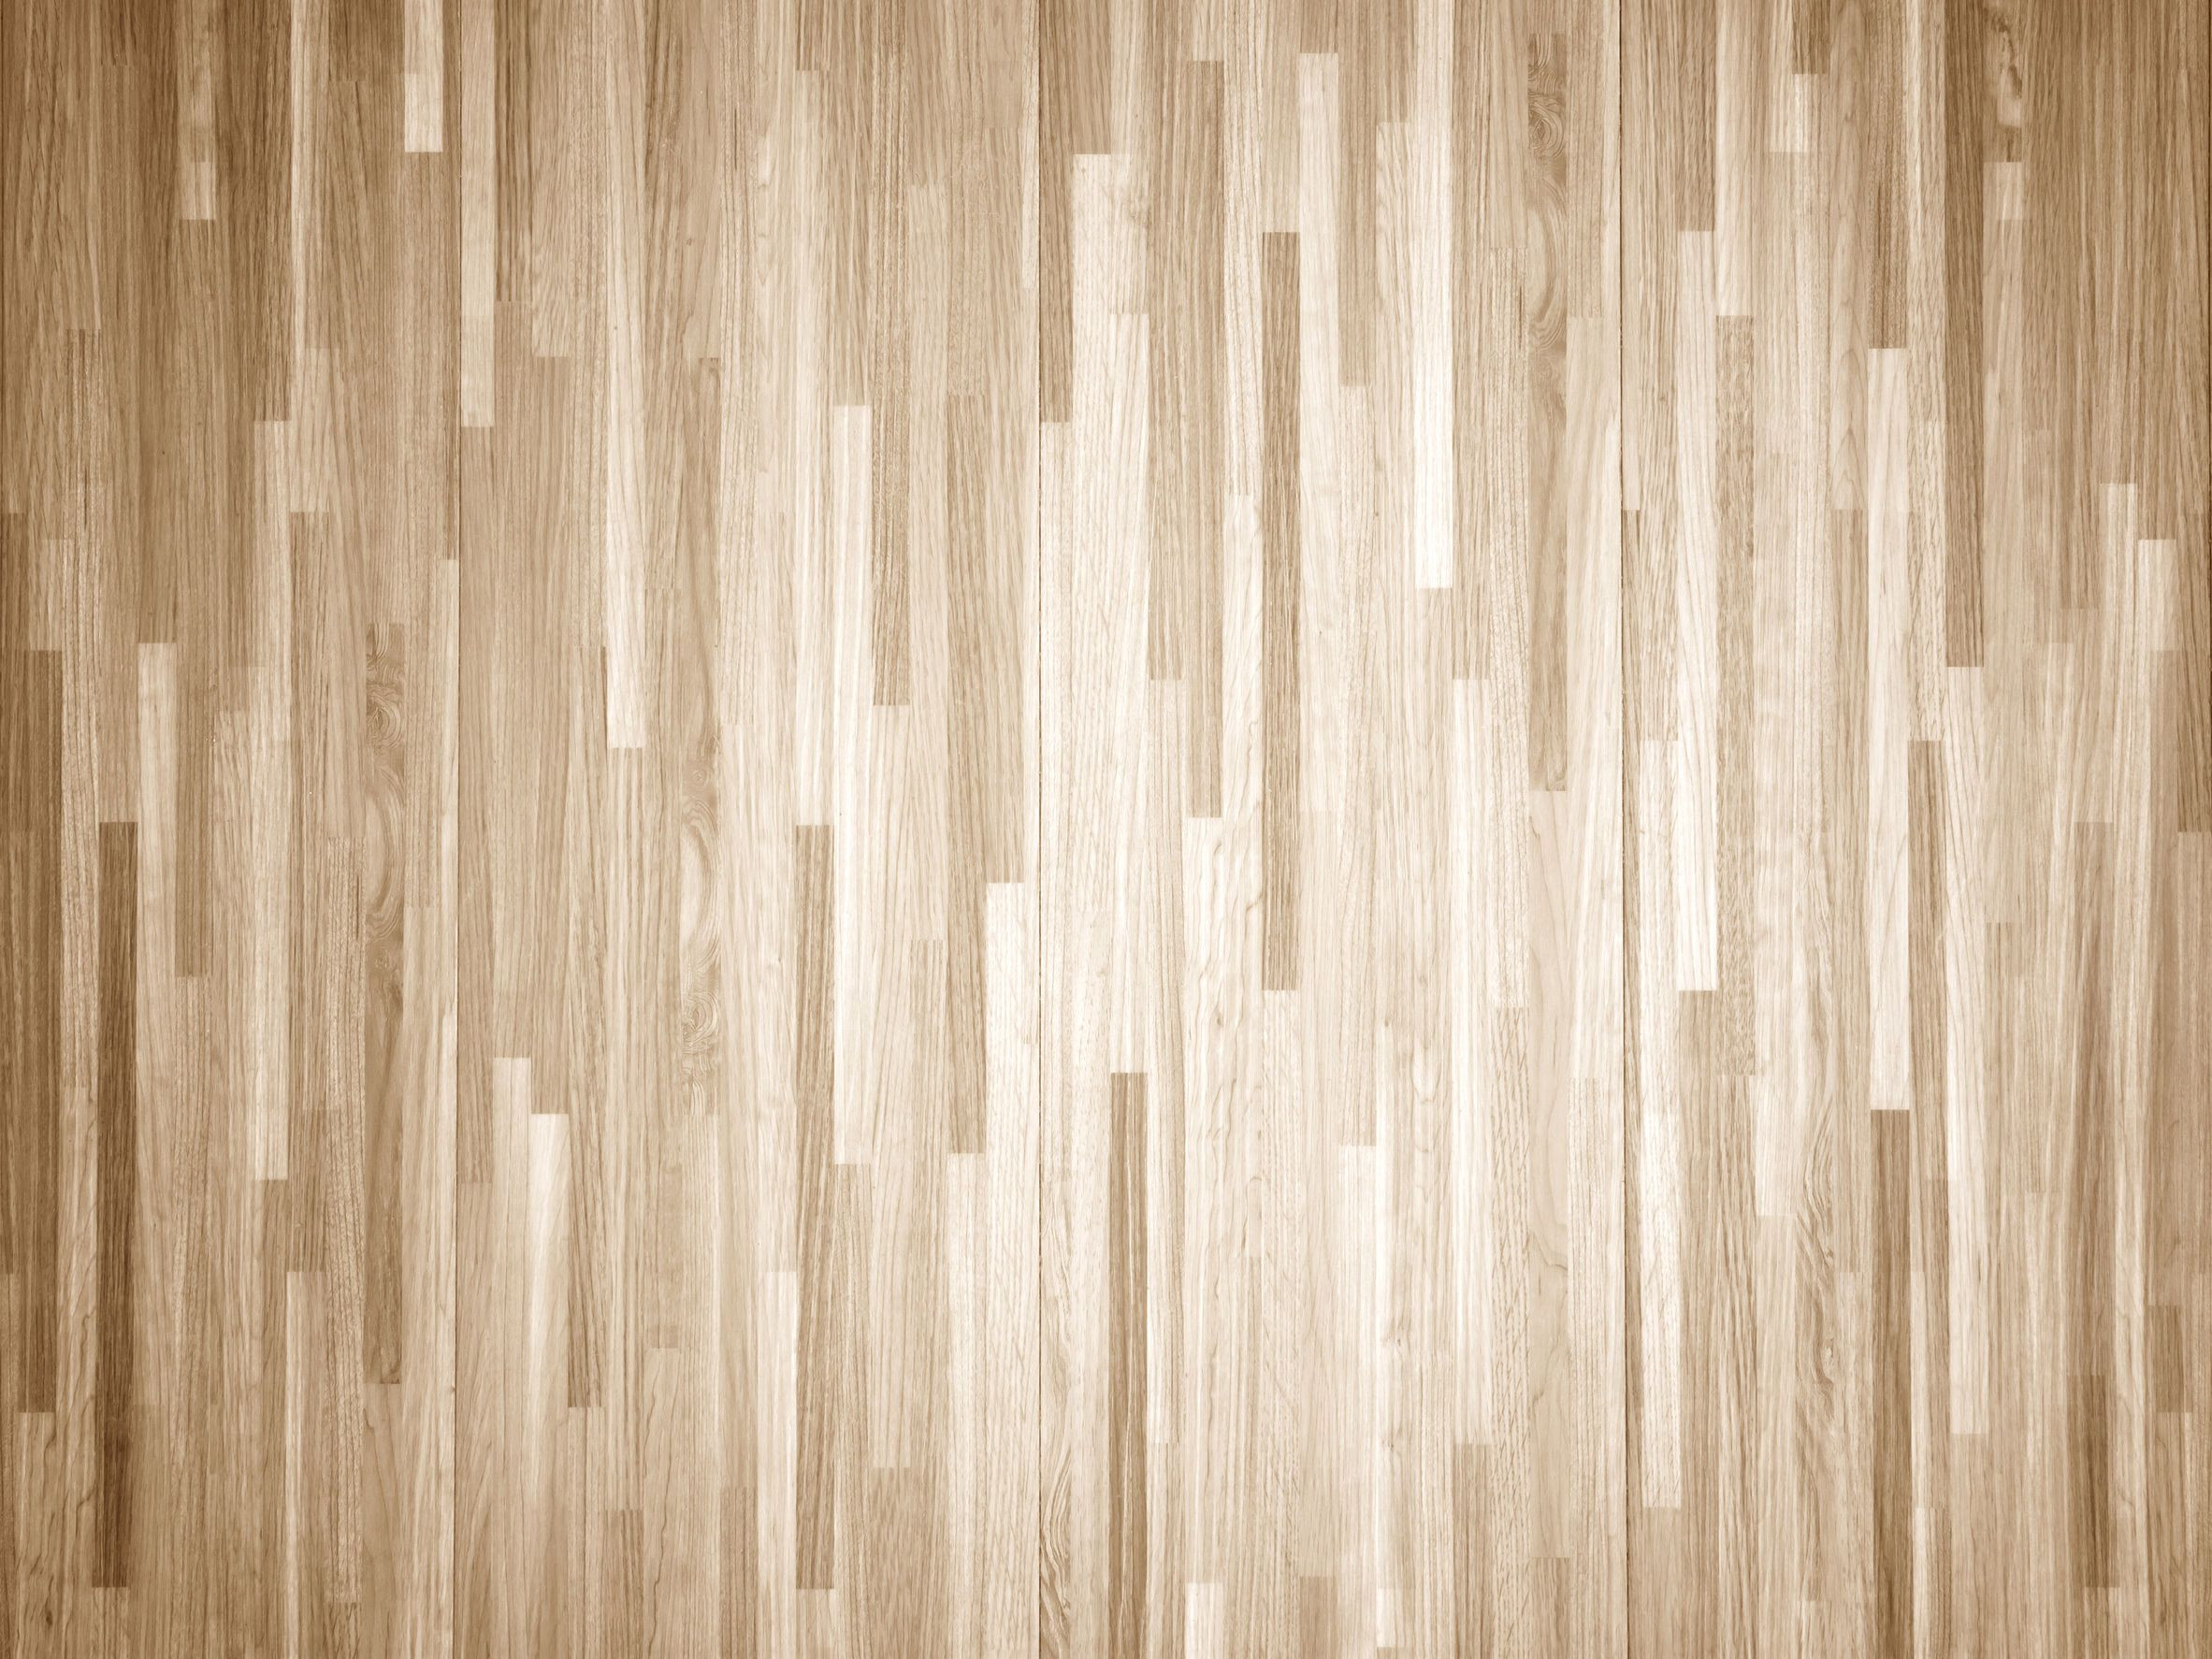 21 Trendy Hardwood Floor Material Cost 2024 free download hardwood floor material cost of how to chemically strip wood floors woodfloordoctor com in you